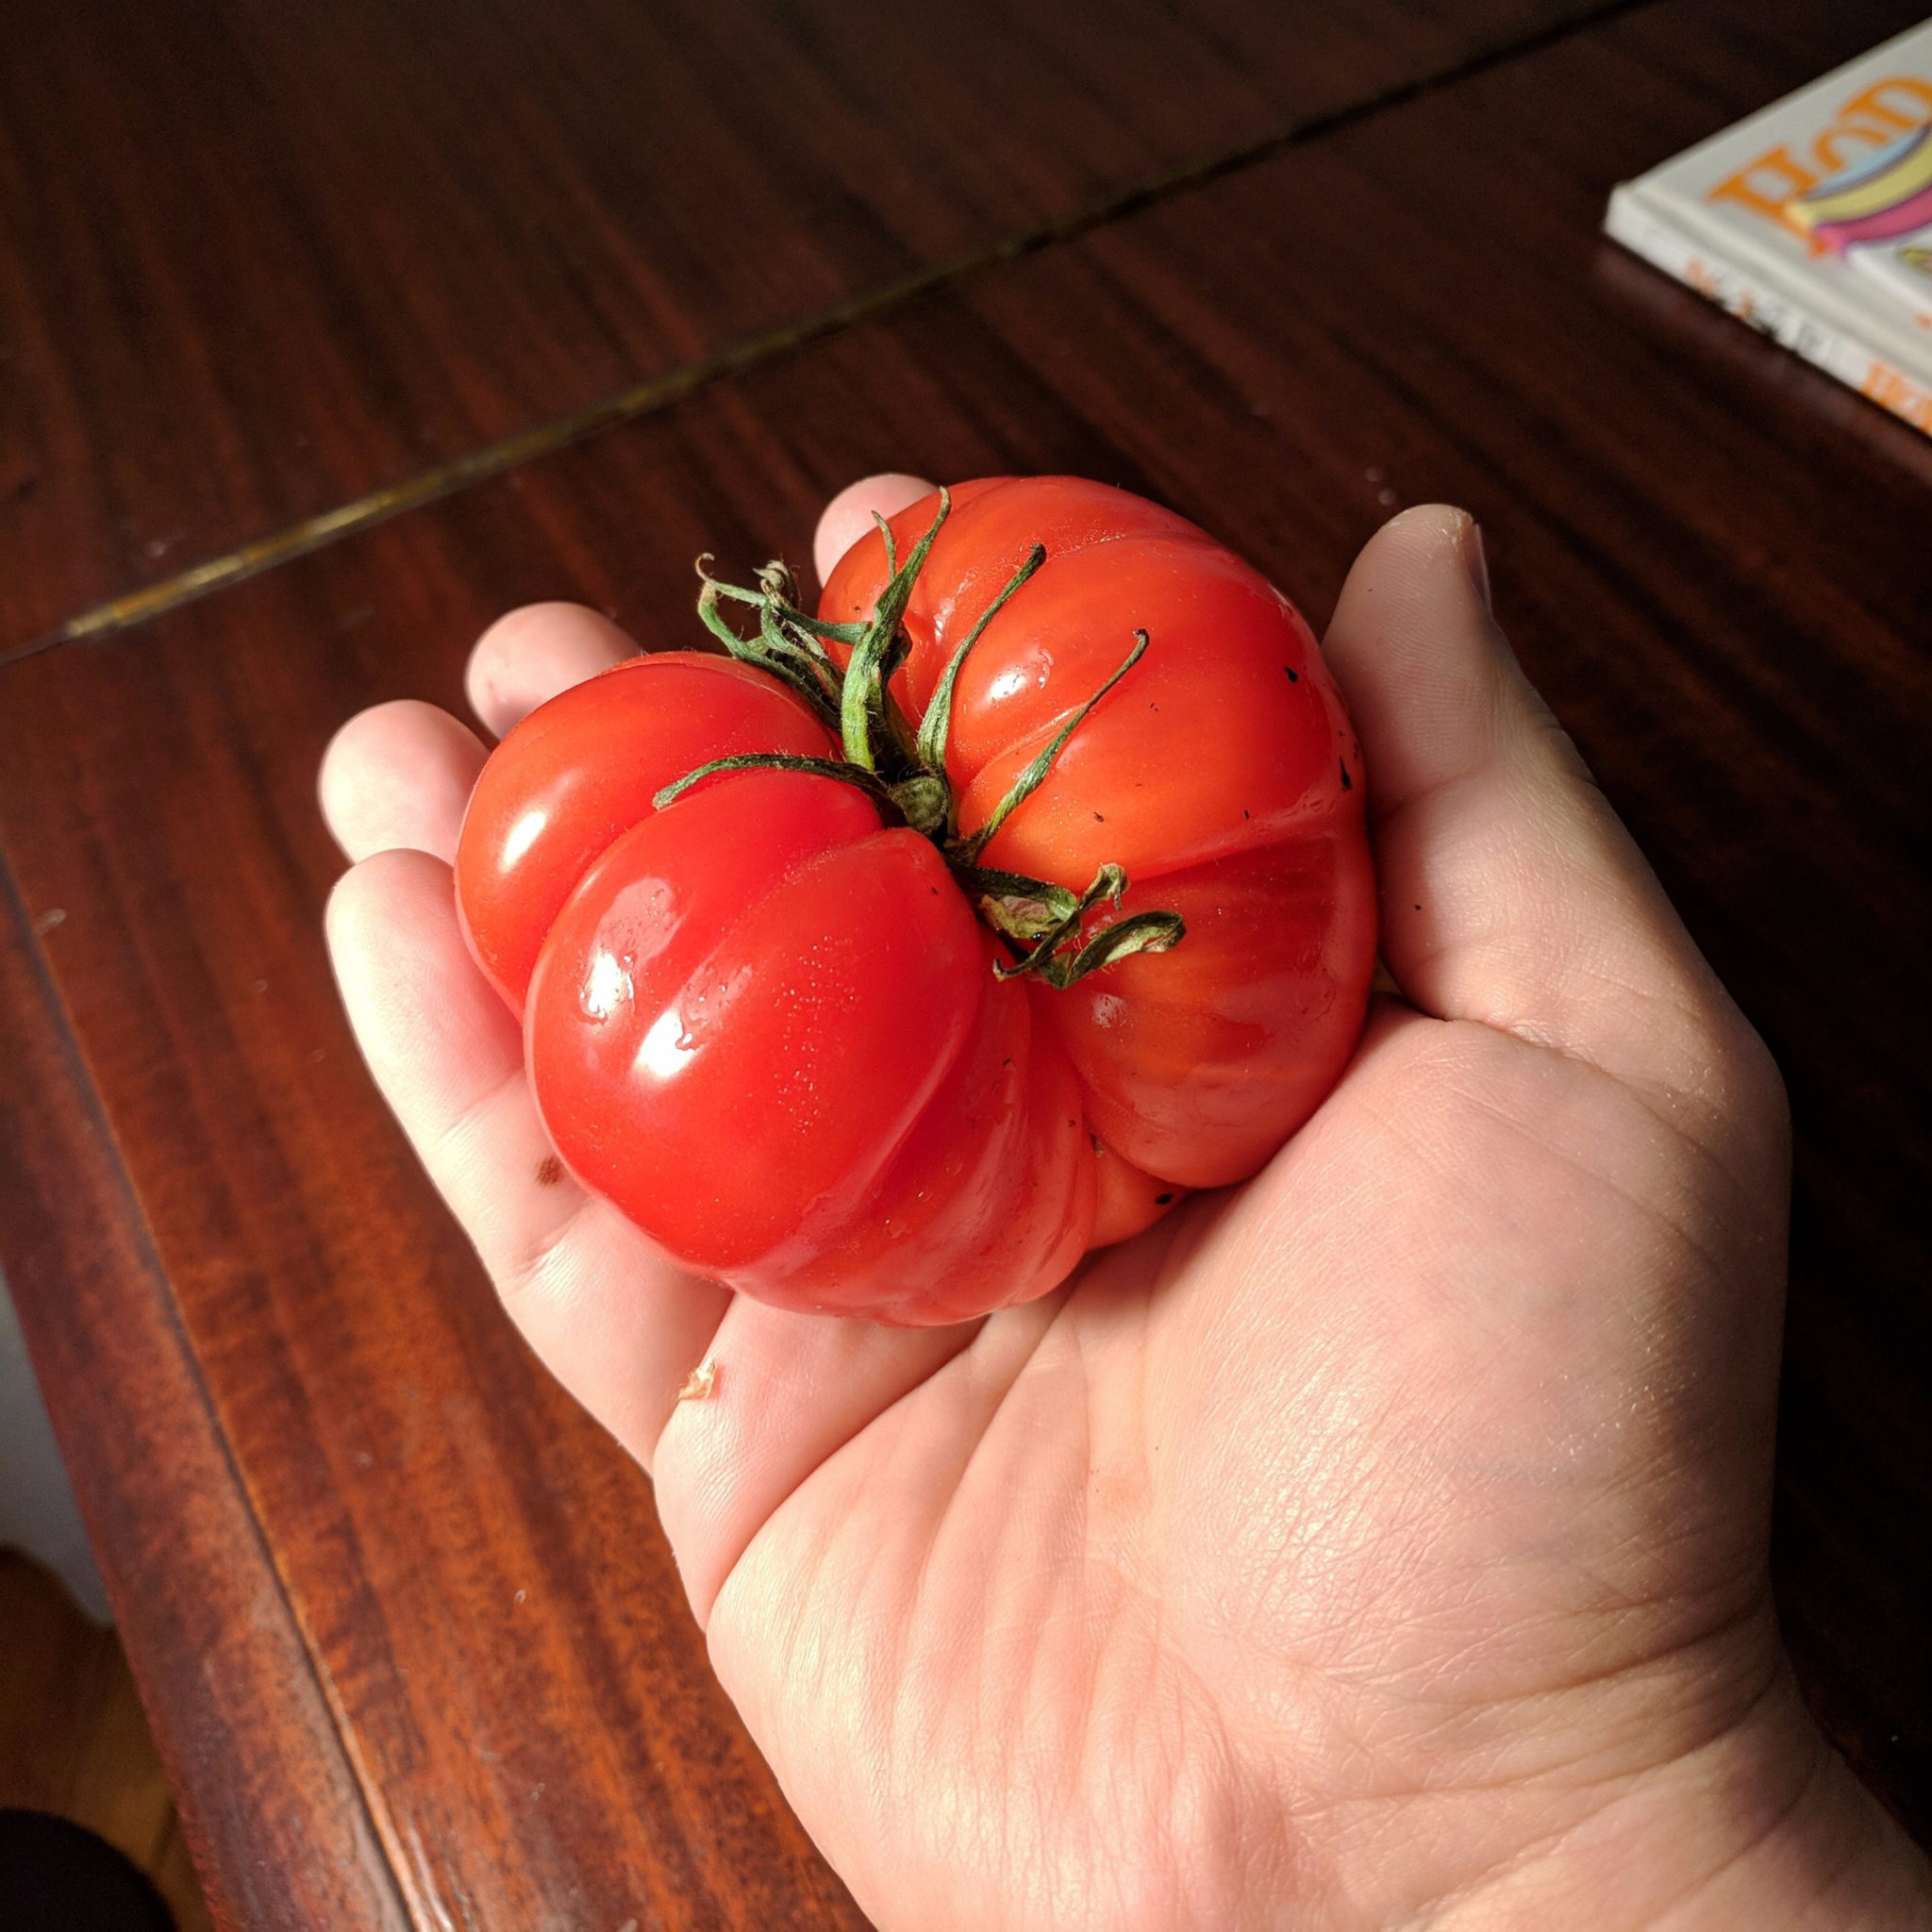 Sexiest Tomato